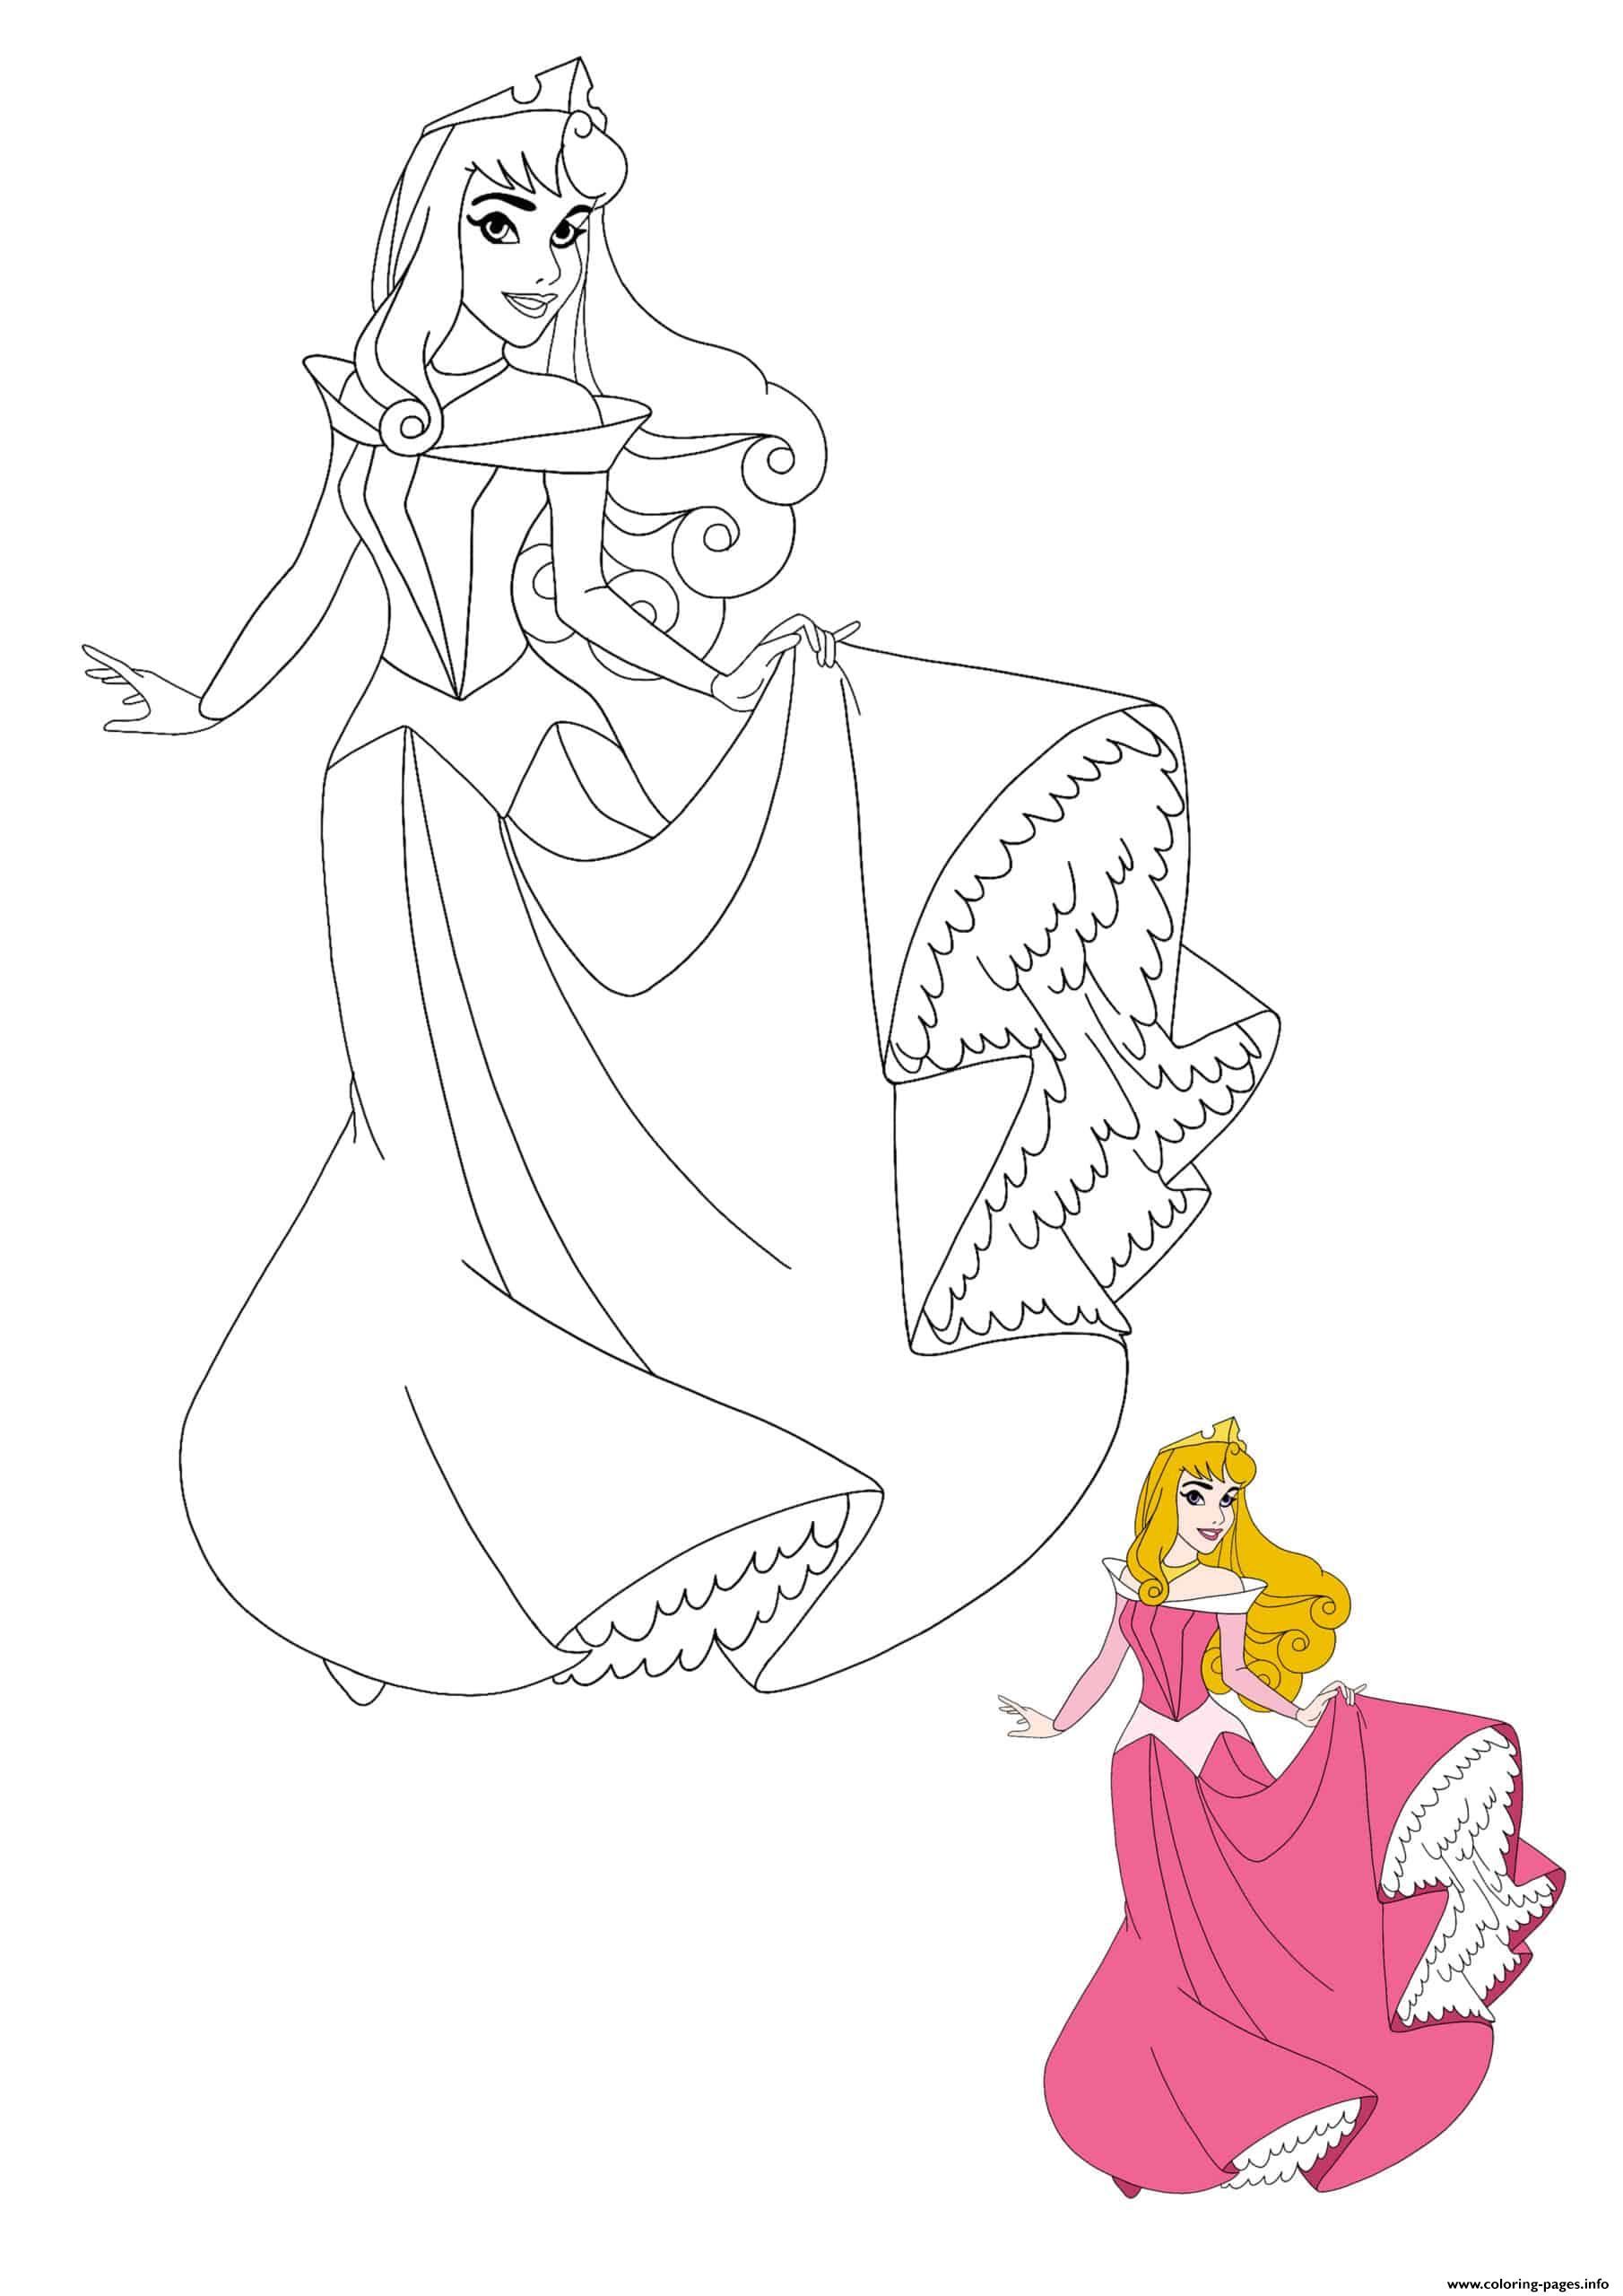 Disney Princess Aurora coloring